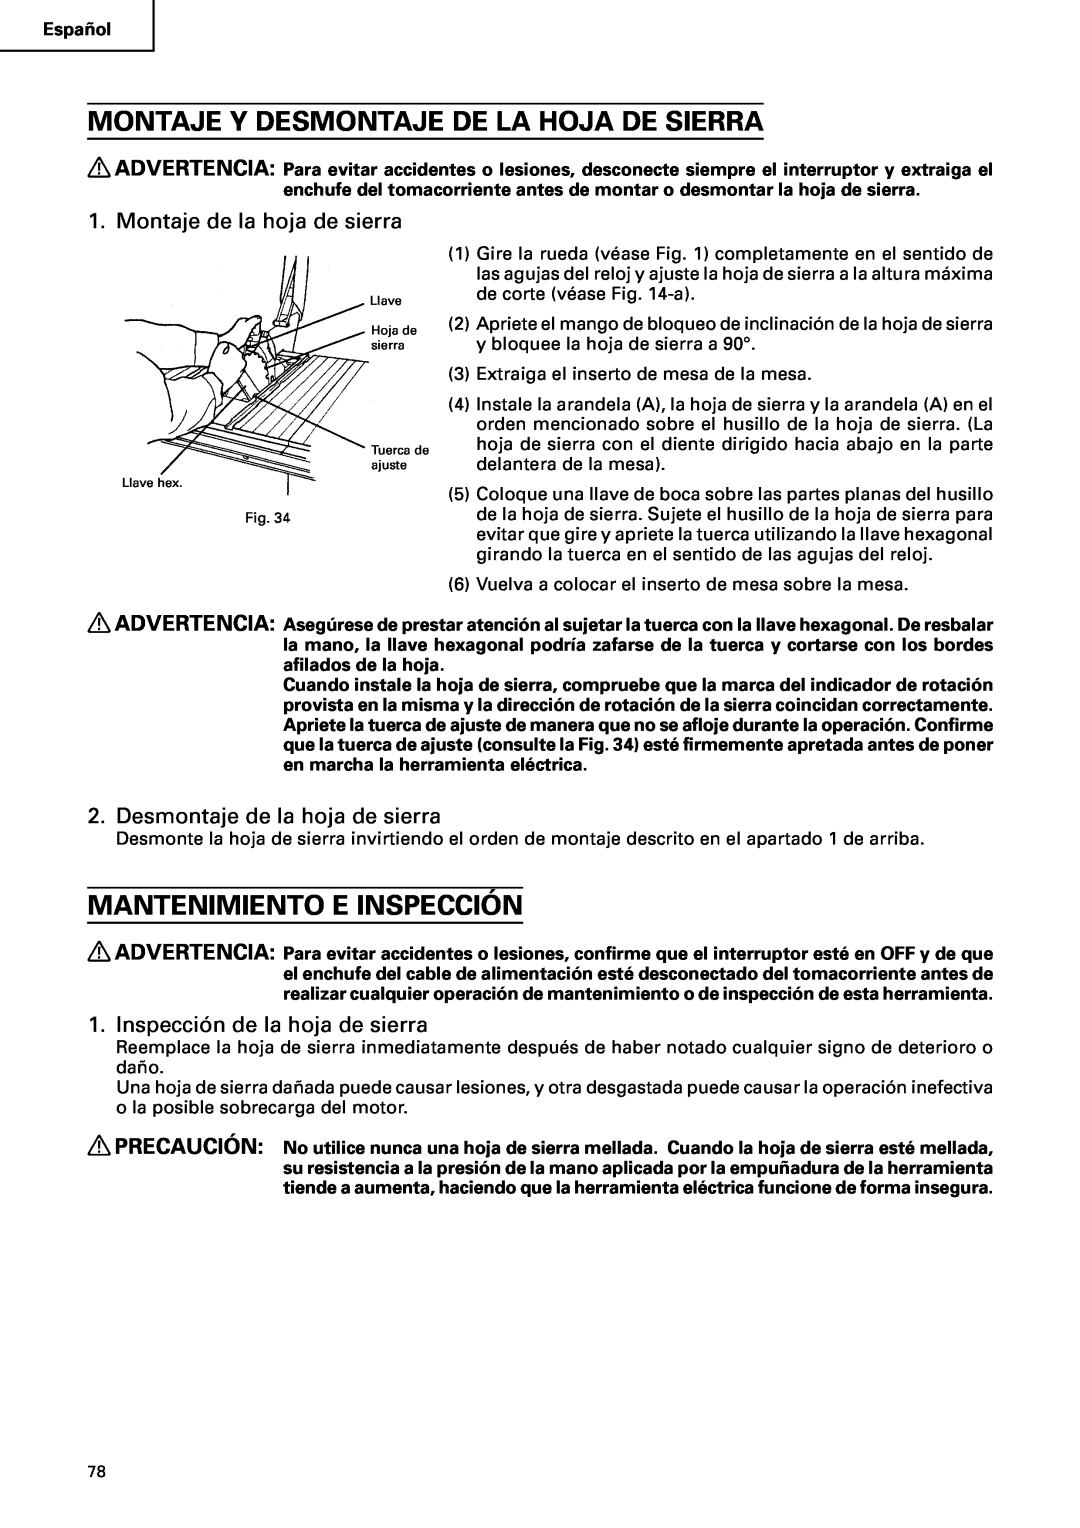 Hitachi C10RA2 Montaje Y Desmontaje De La Hoja De Sierra, Mantenimiento E Inspección, Montaje de la hoja de sierra 